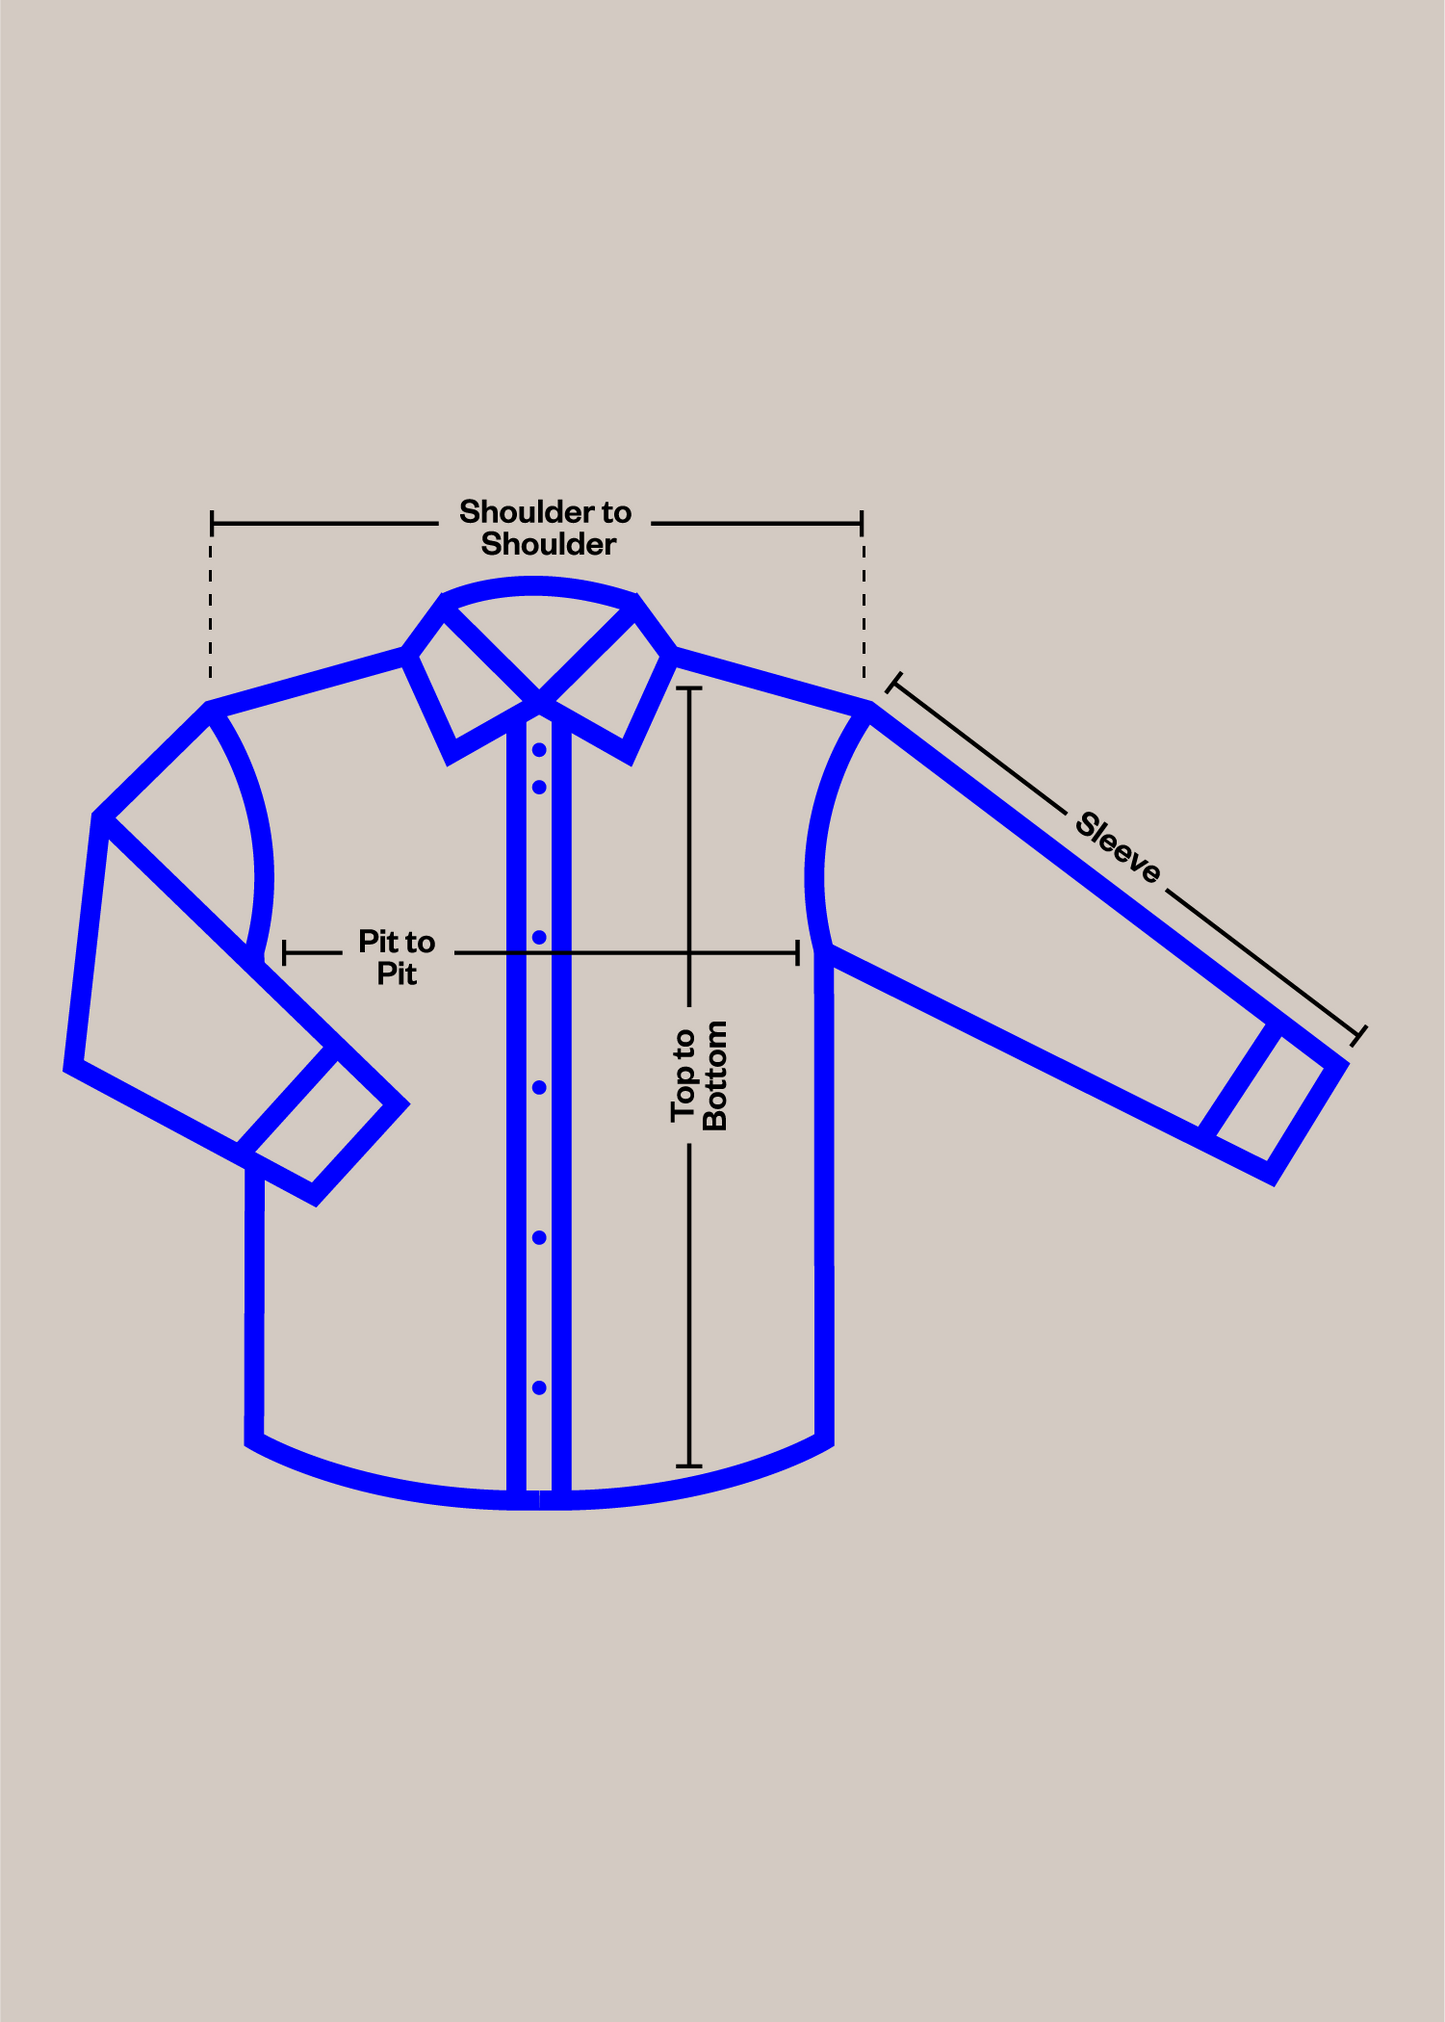 Vintage 1980s Hanes Fort Jackson S.C. T-Shirt Size 2XS/XS